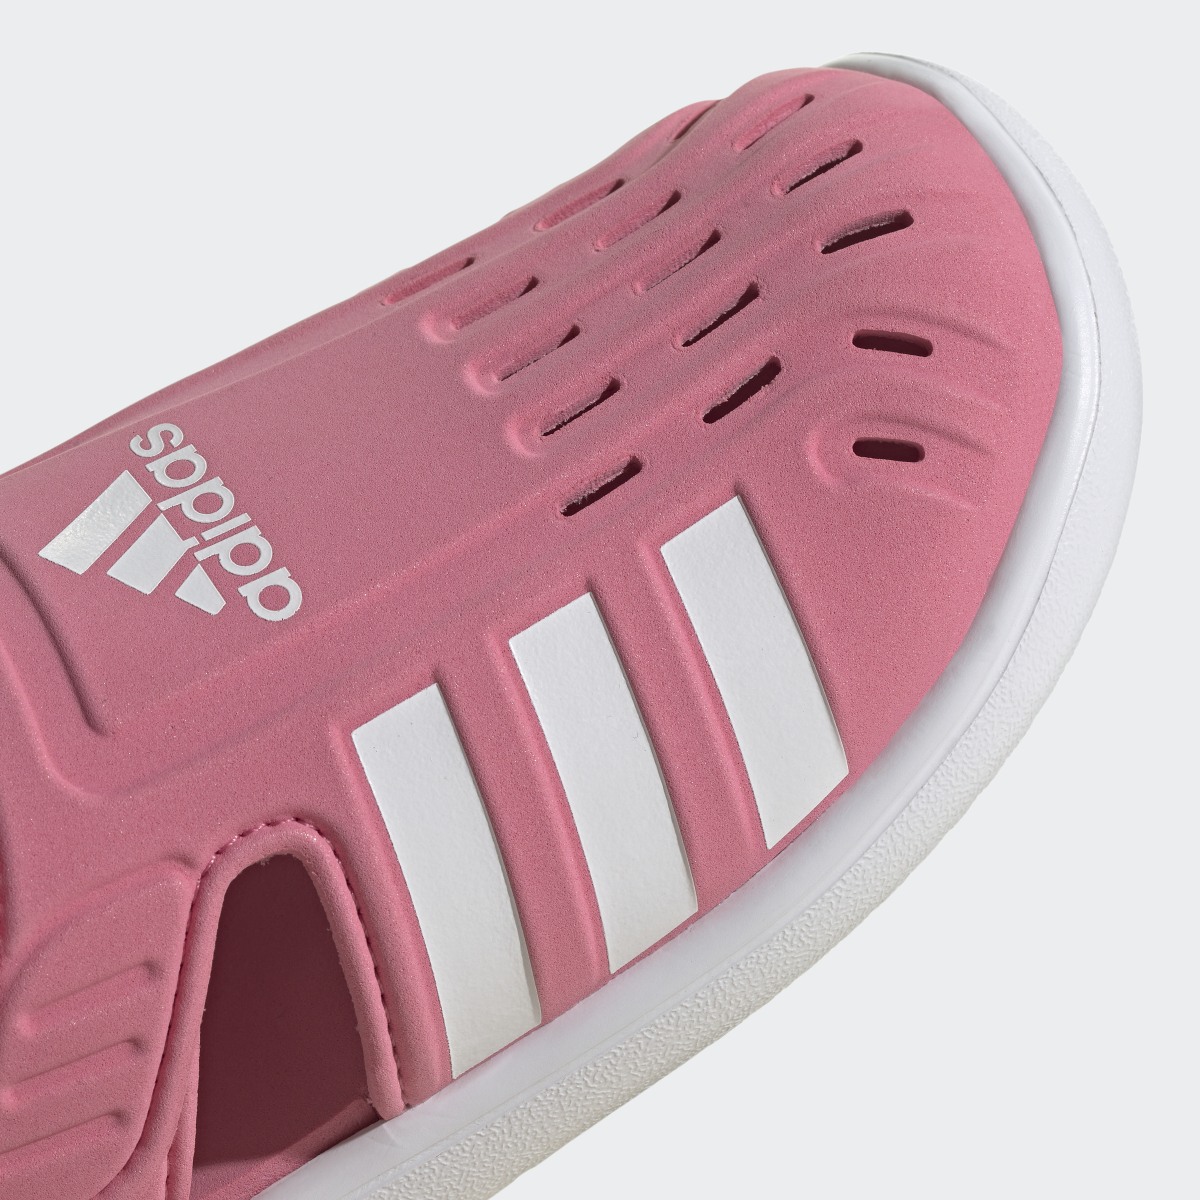 Adidas Claquette Summer Closed Toe Water. 9